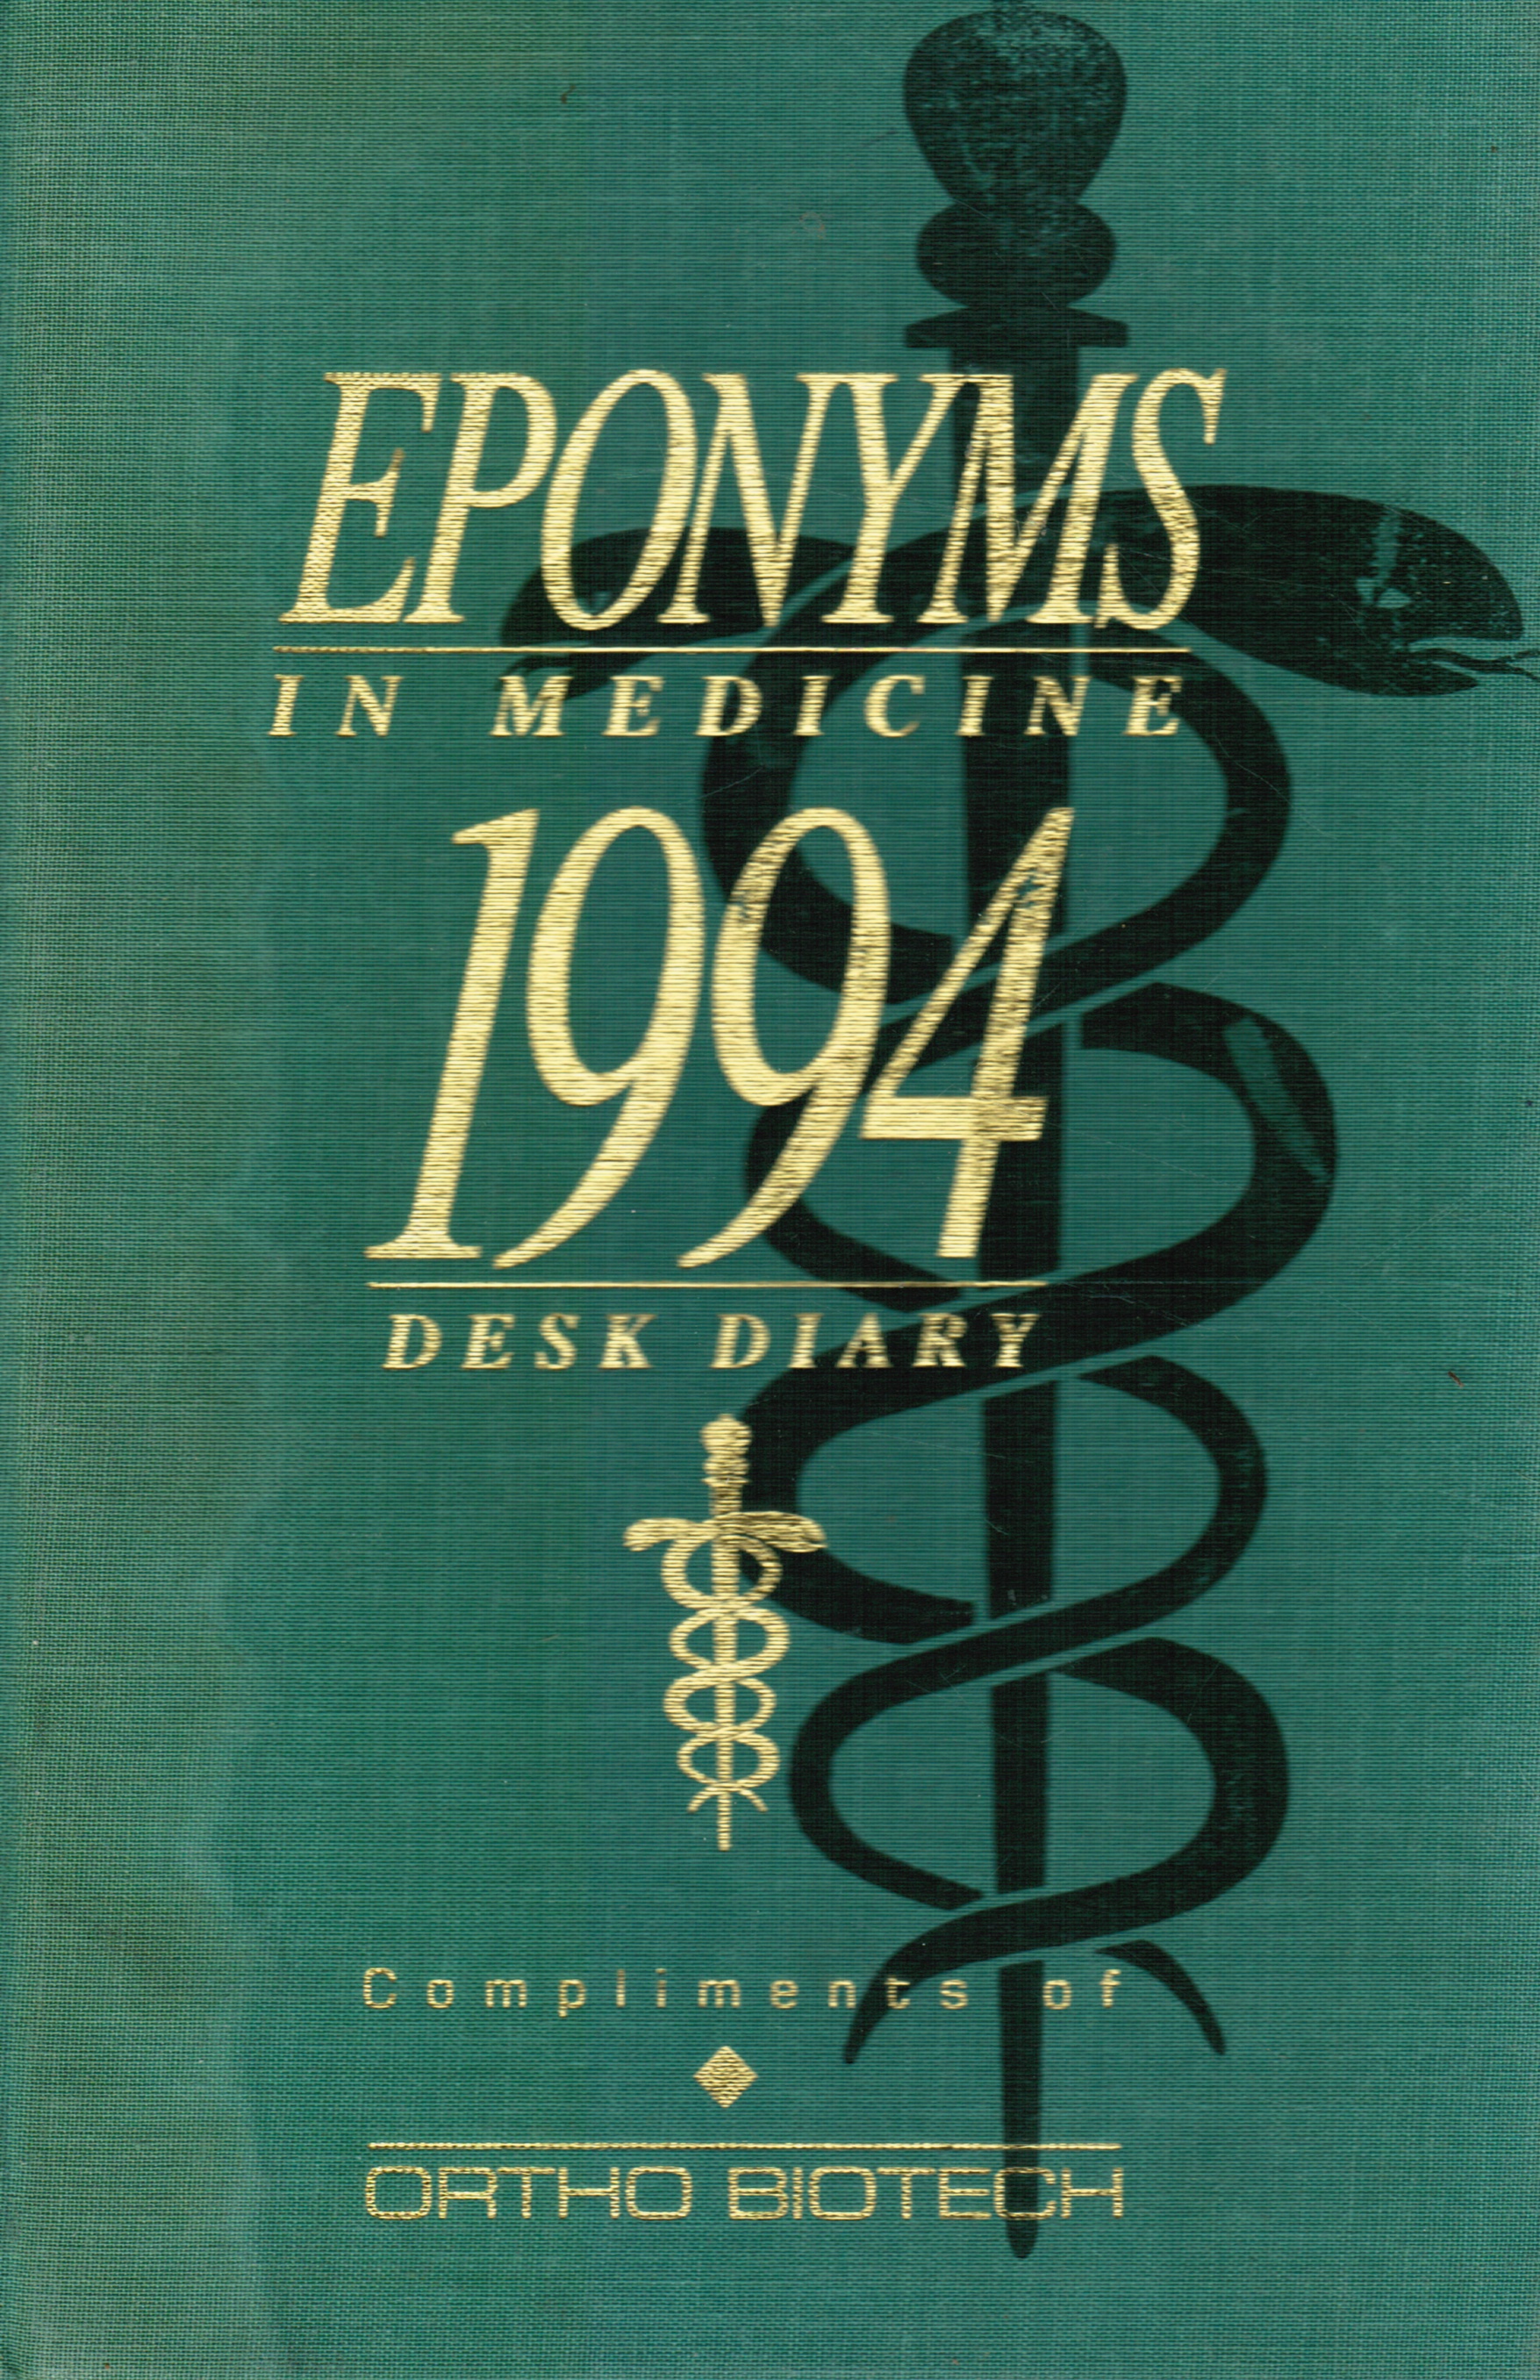  - Eponyms in Medicine: 1994 Desk Diary